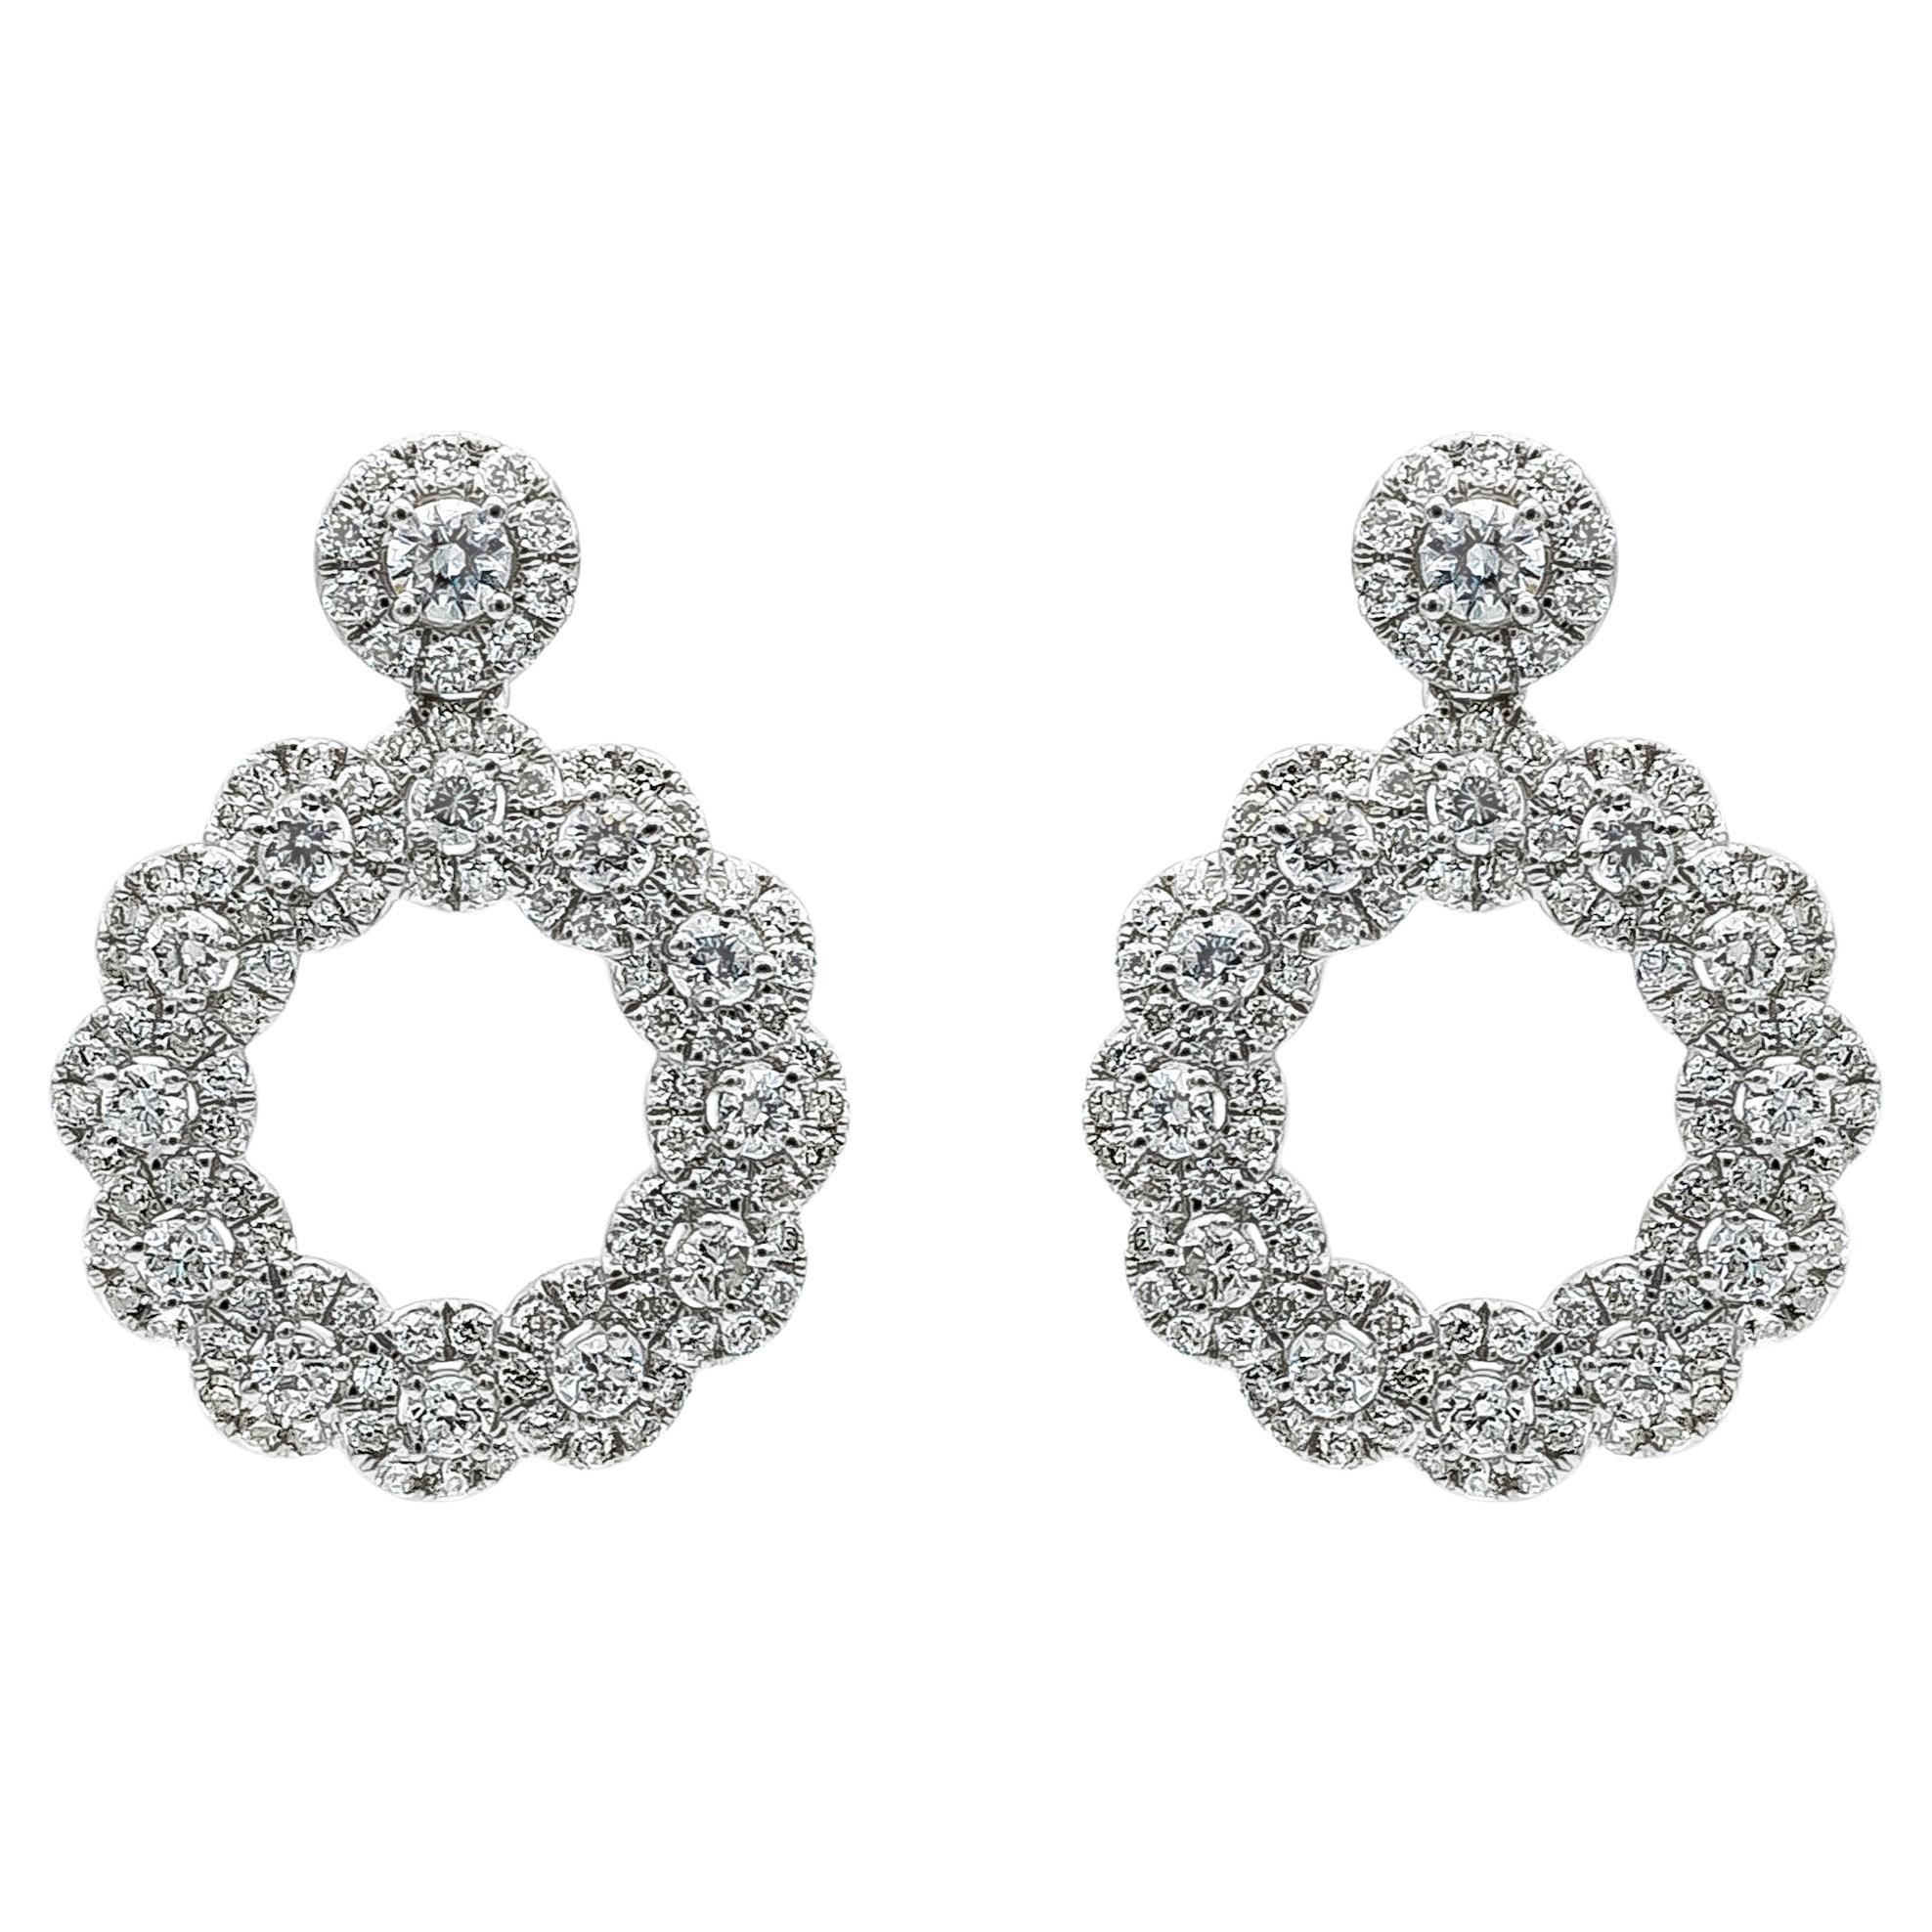 Roman Malakov 1.42 Carat Total Round Diamond Fashion Dangle Earrings